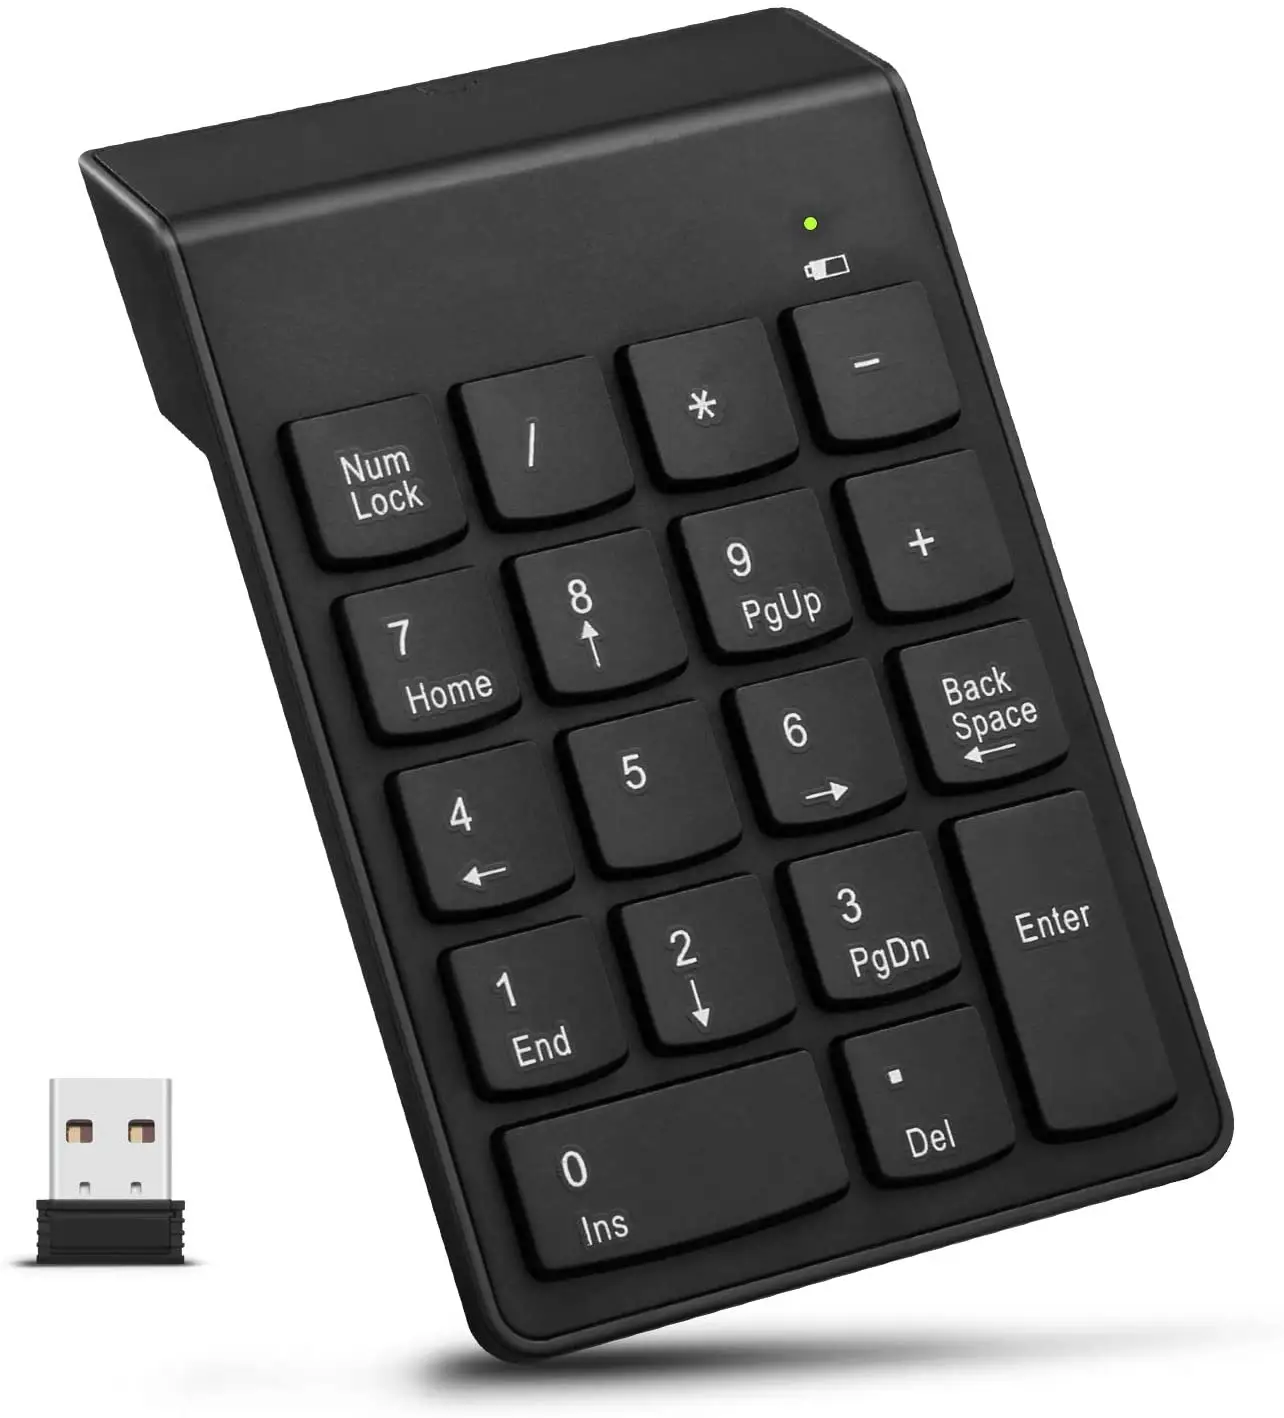 Pad Nomor USB Nirkabel, Tombol Numerik 2.4GHz 18 Kunci Mini Portabel Nomor Masuk Data Pad untuk Laptop Desktop PC Permukaan Komputer